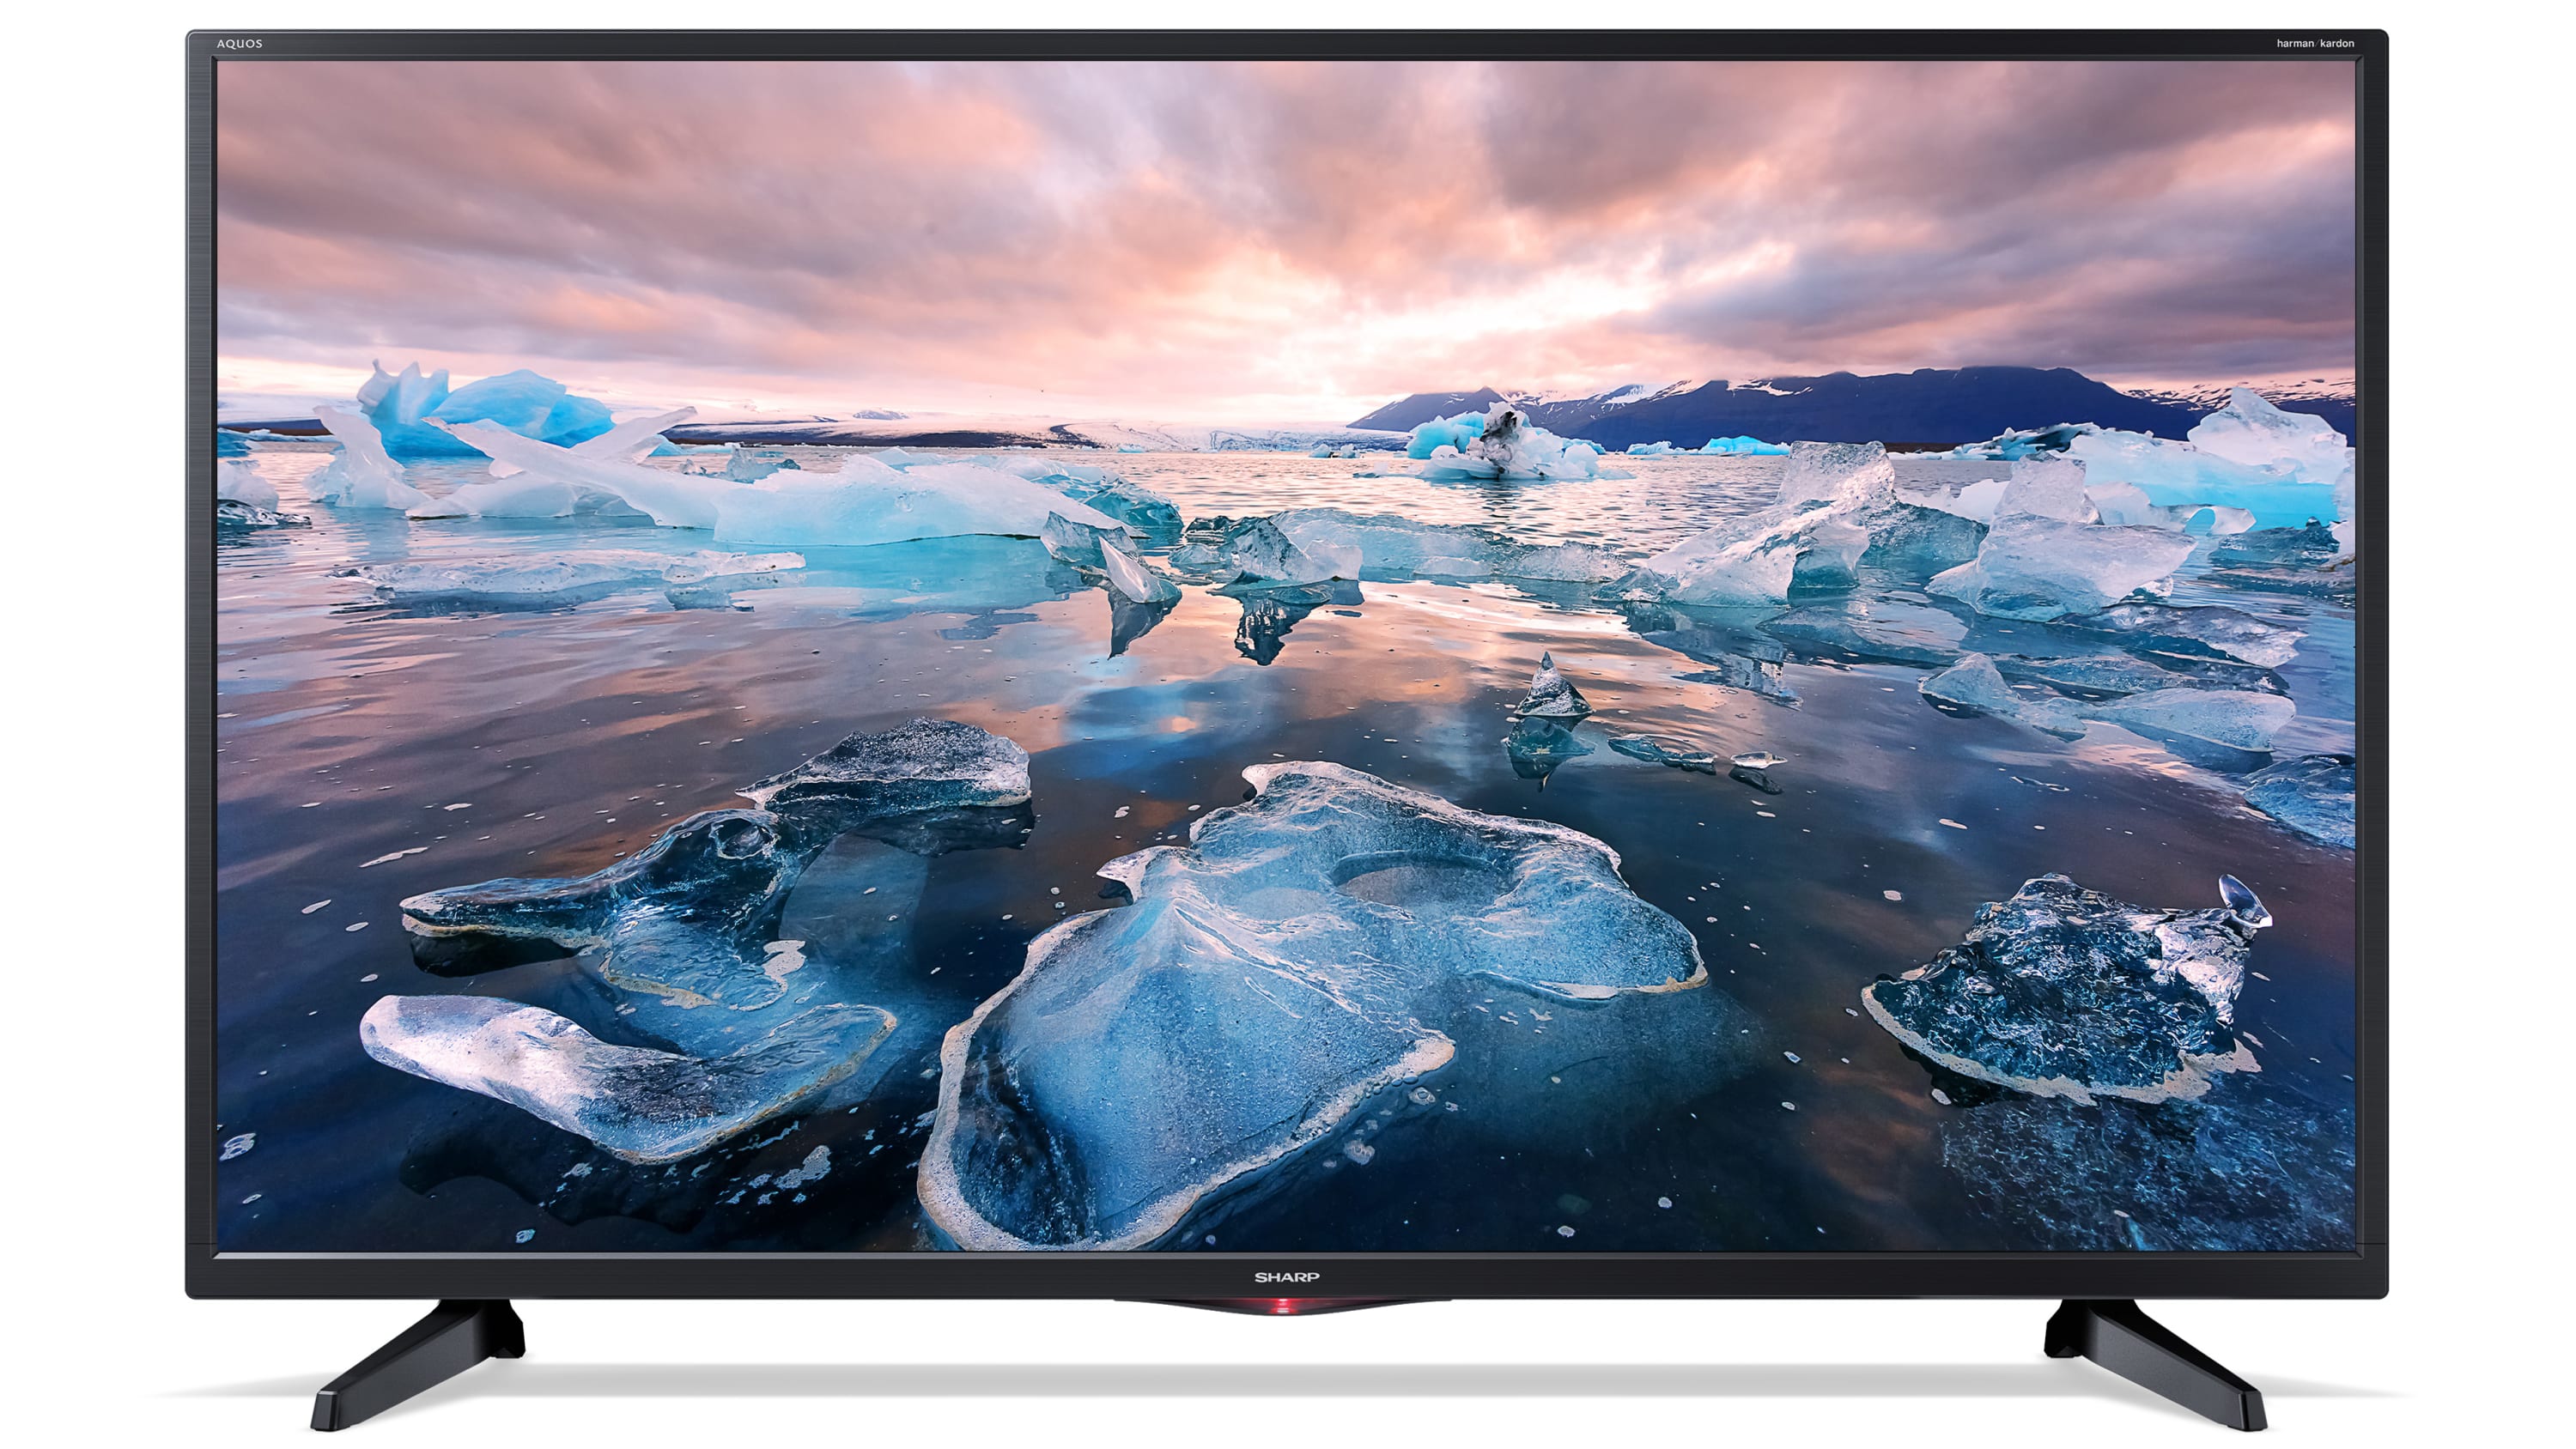 Smart TV HD/Full HD - 40" FULL HD SMART